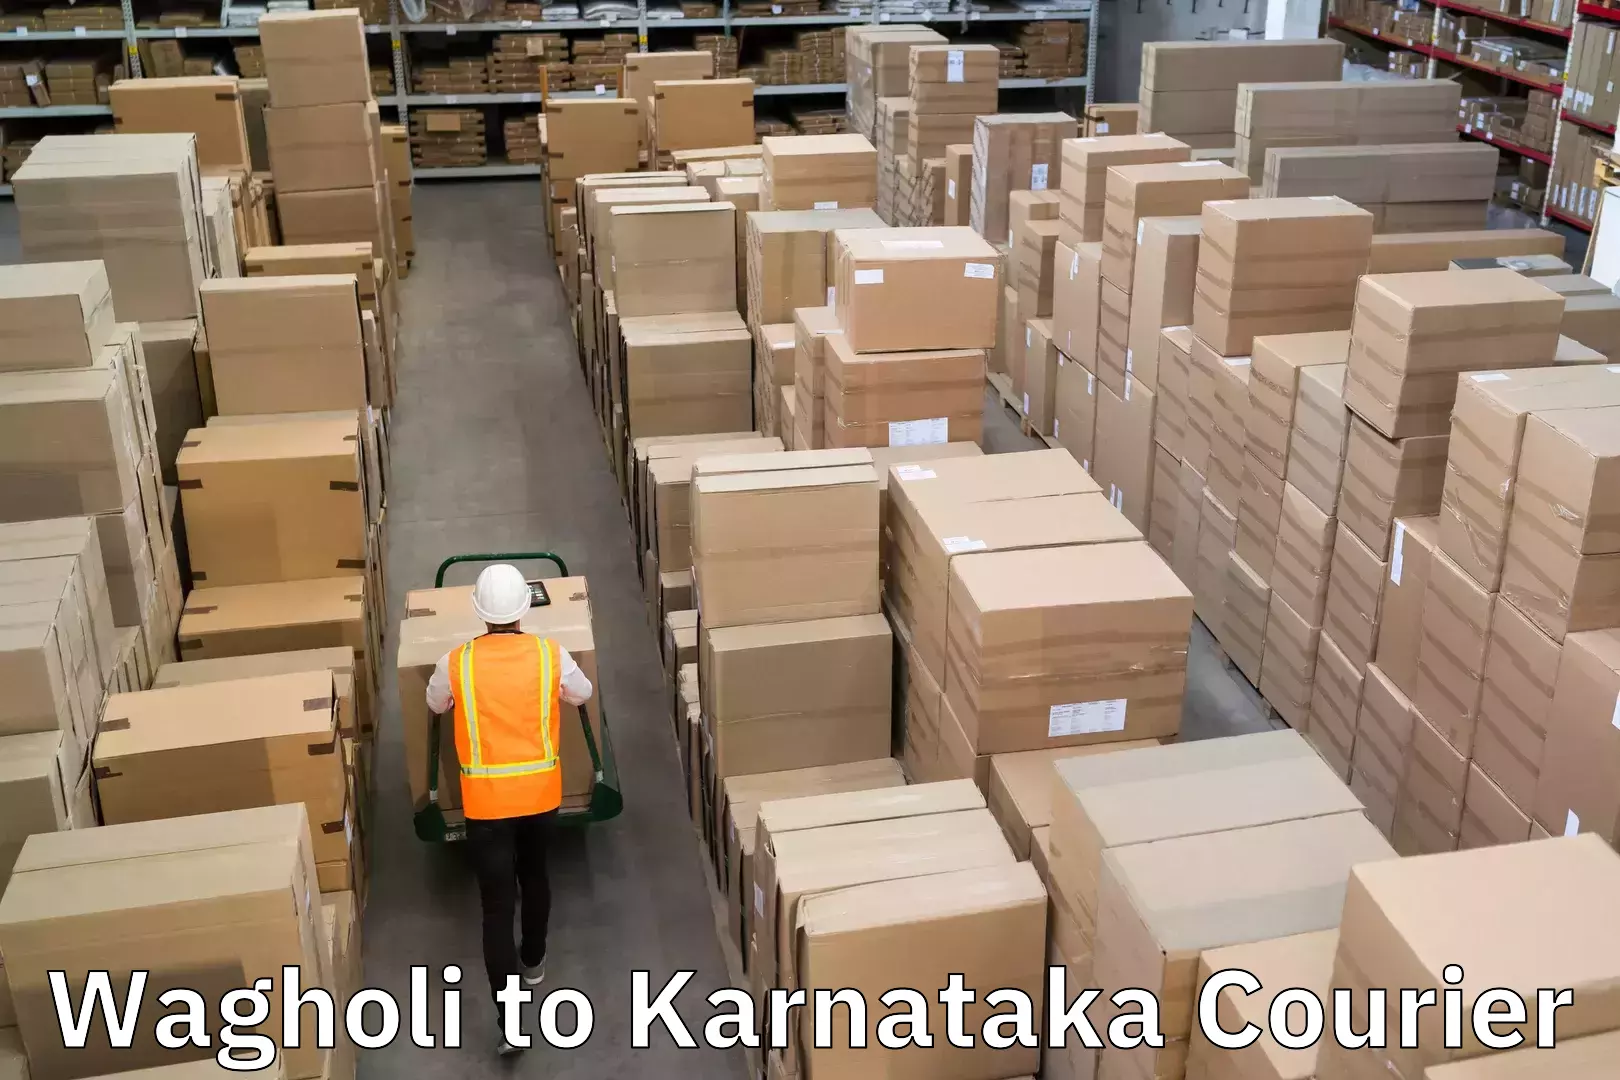 High-capacity parcel service Wagholi to Karnataka